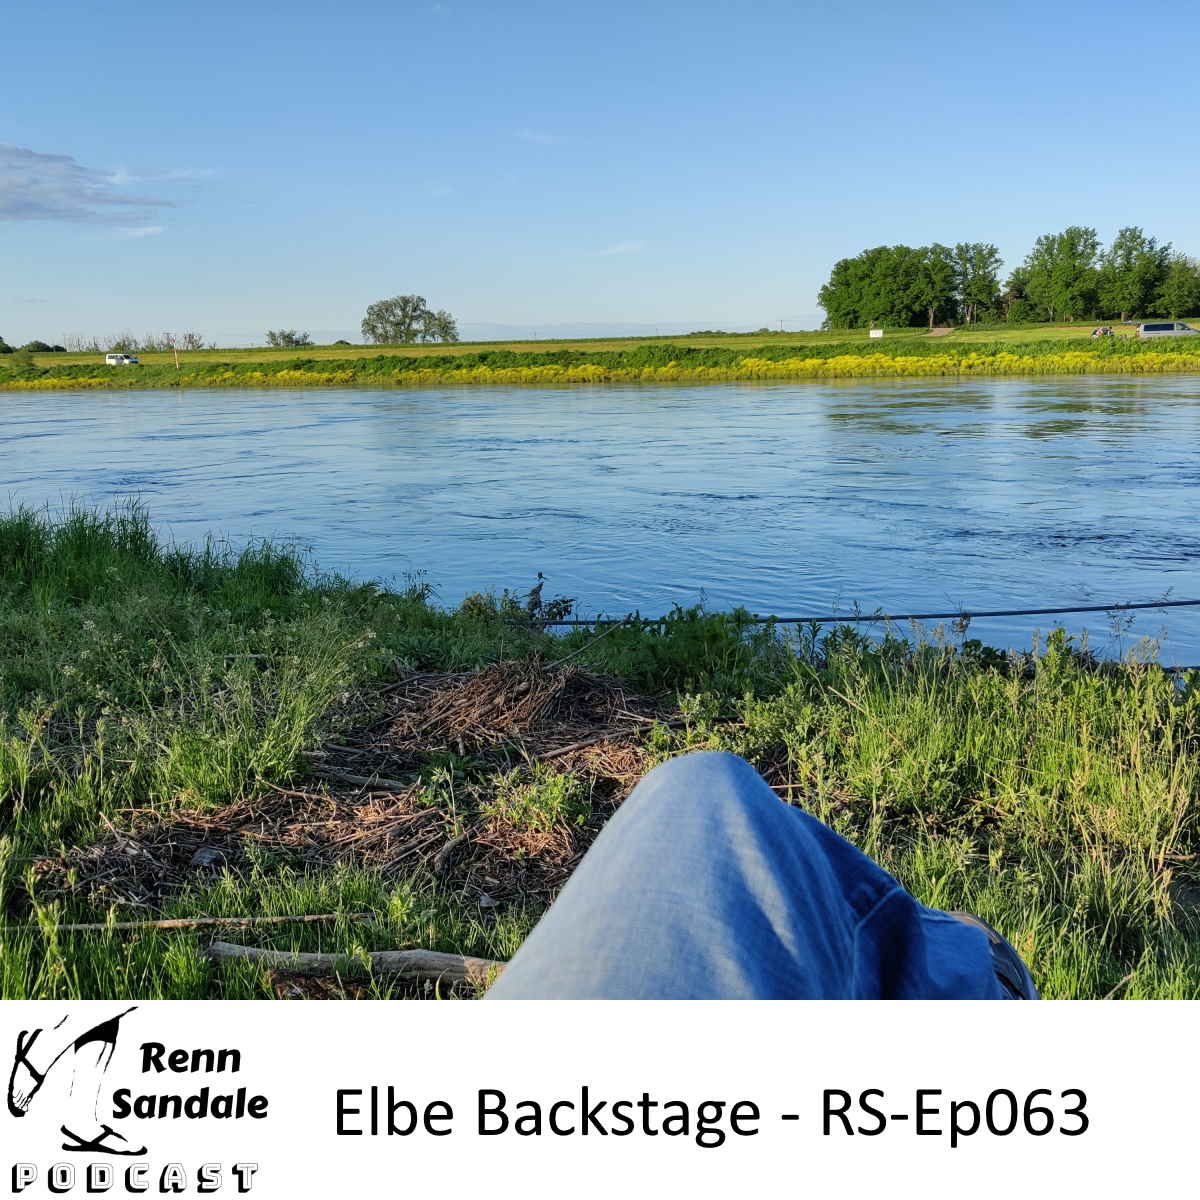 Elbe Backstage - RS-Ep063